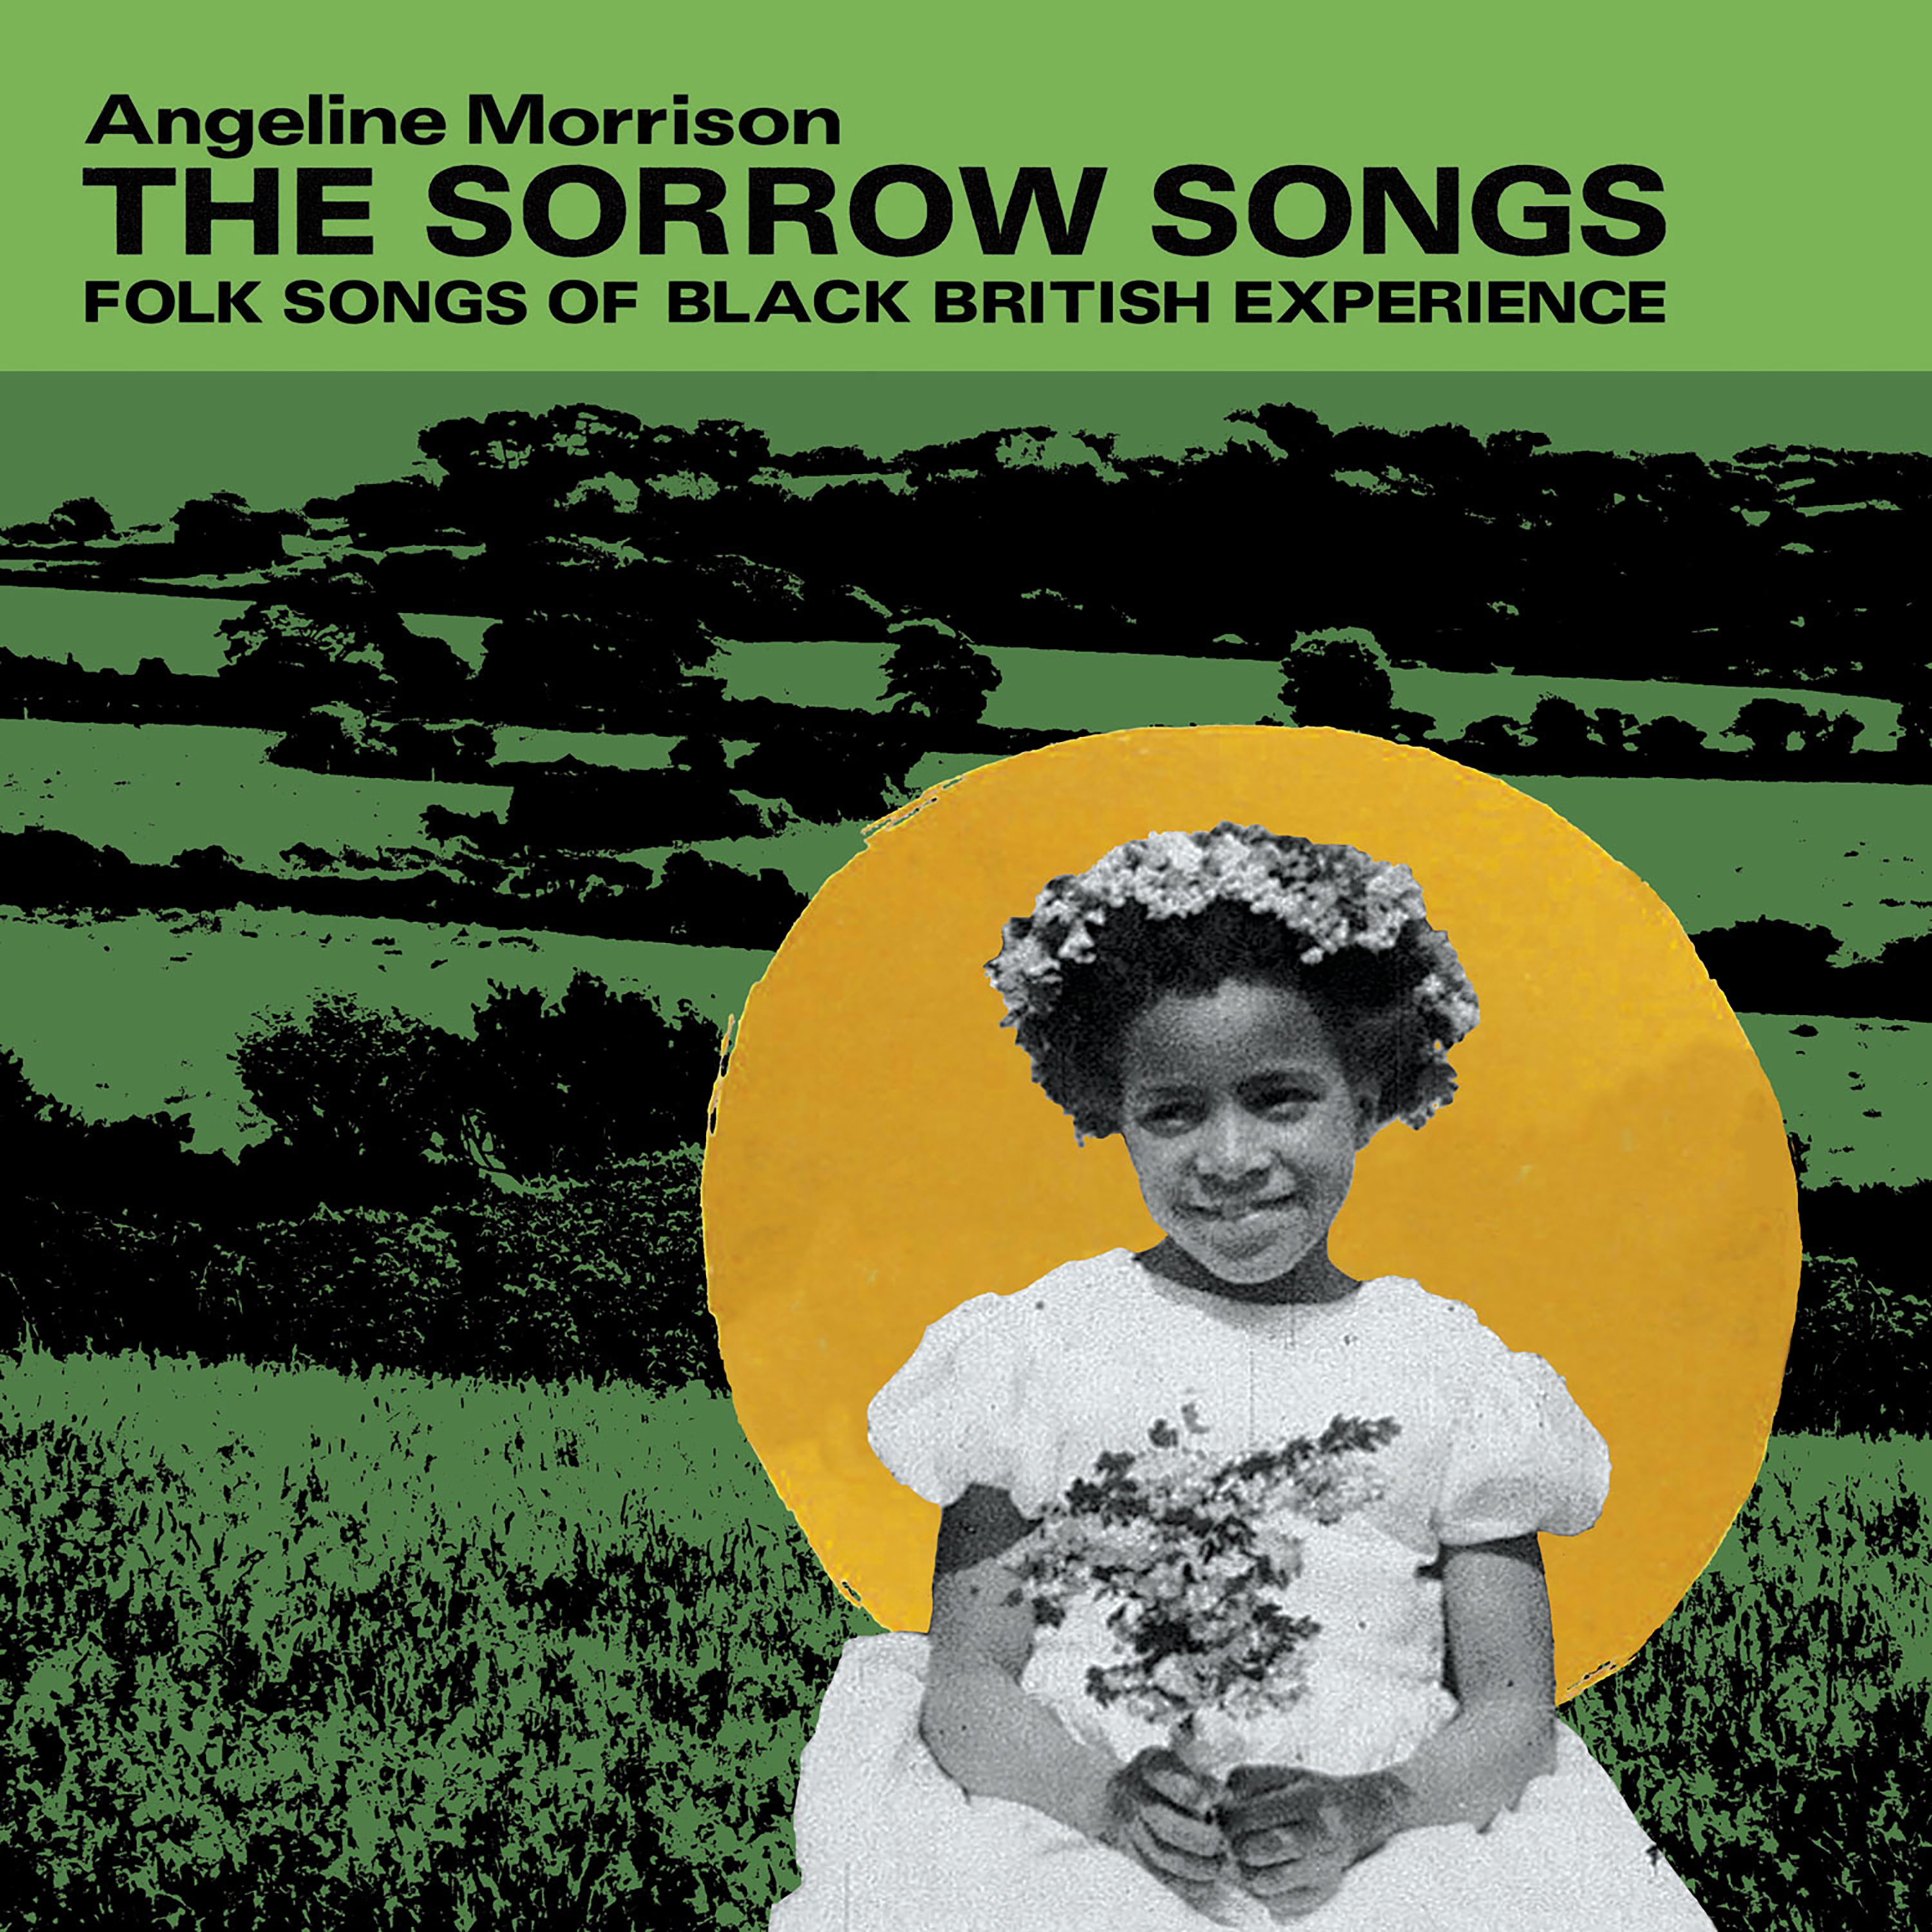 Angeline Morrison -2022 - The Sorrow Songs (Folk Songs of Black British Experience)